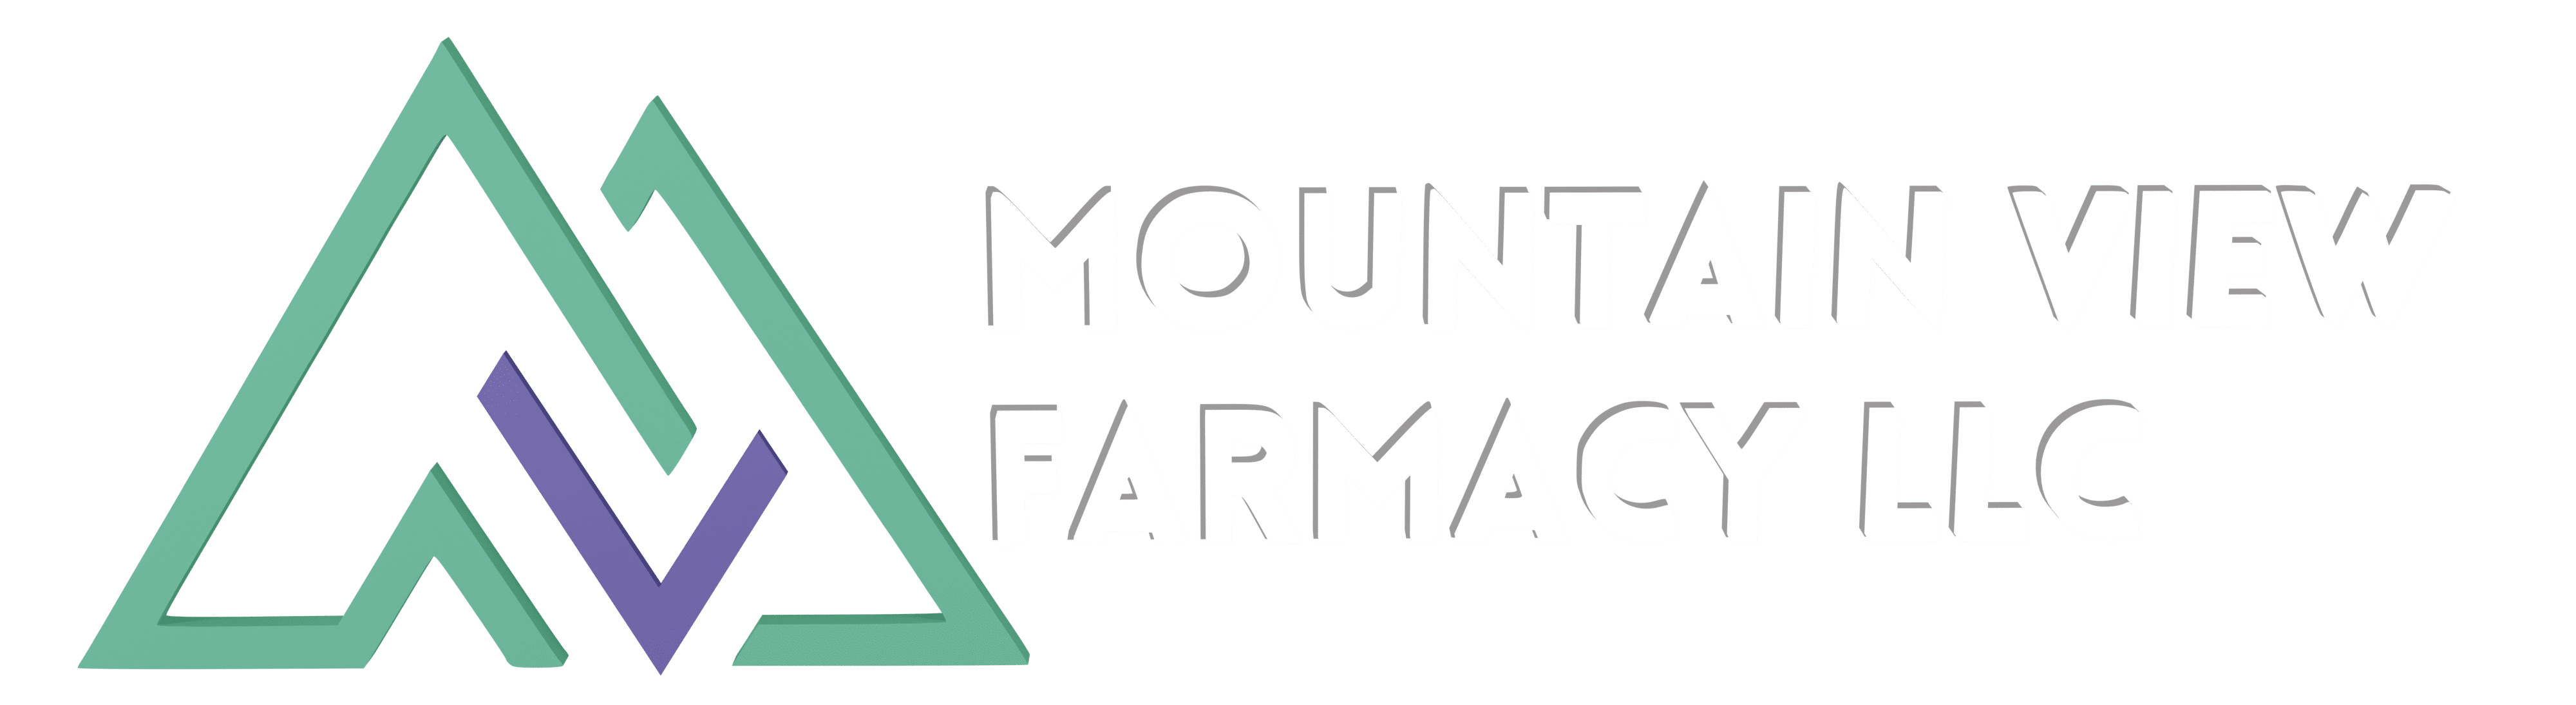 Mountain View Farmacy, LLC (MVF)